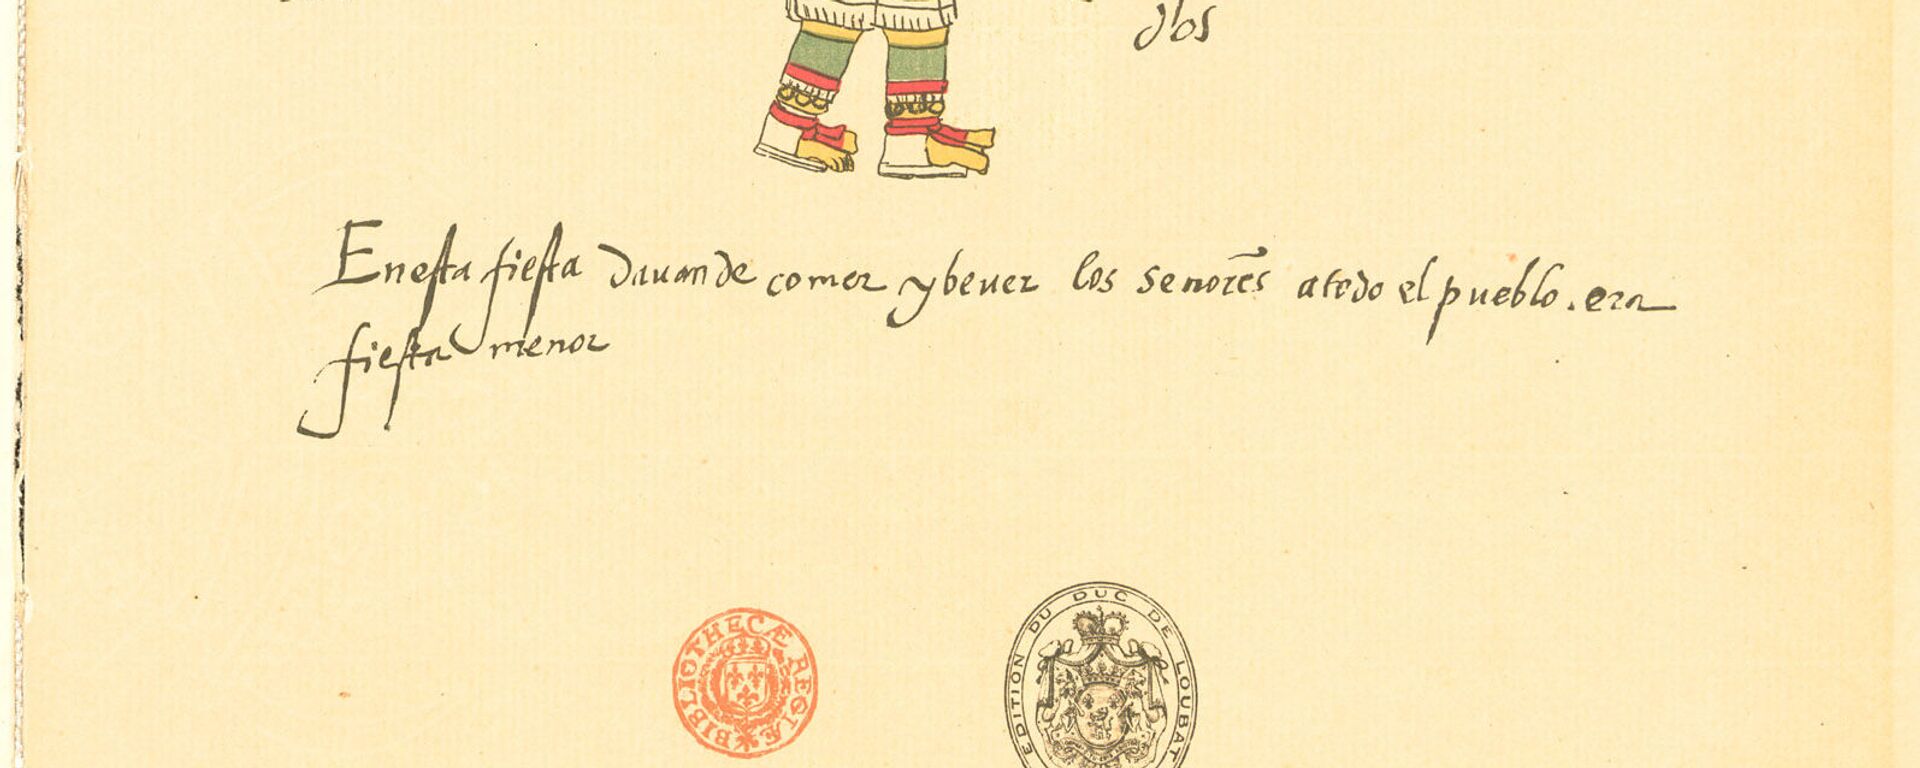 Fragmentos da página do Codex Telleriano-Remensis - Sputnik Brasil, 1920, 01.09.2021